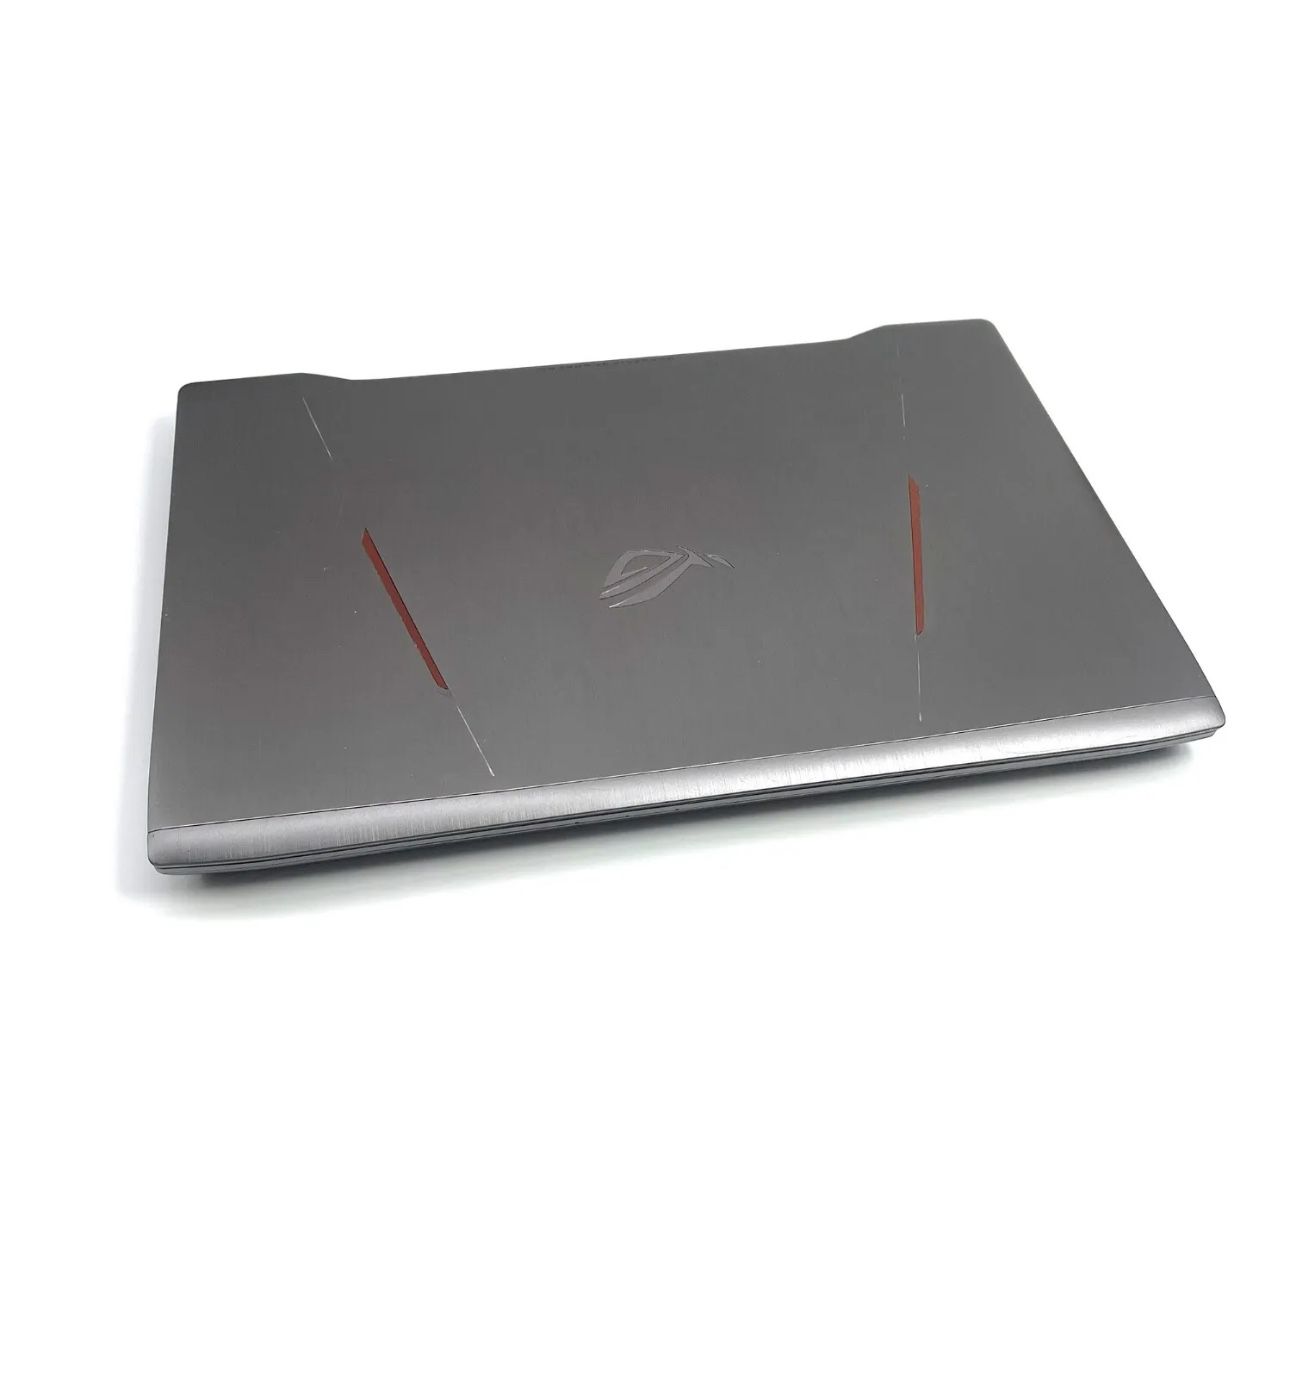 ASUS ROG Laptop (Model GL702) upgraded Hard Drive (1tb)